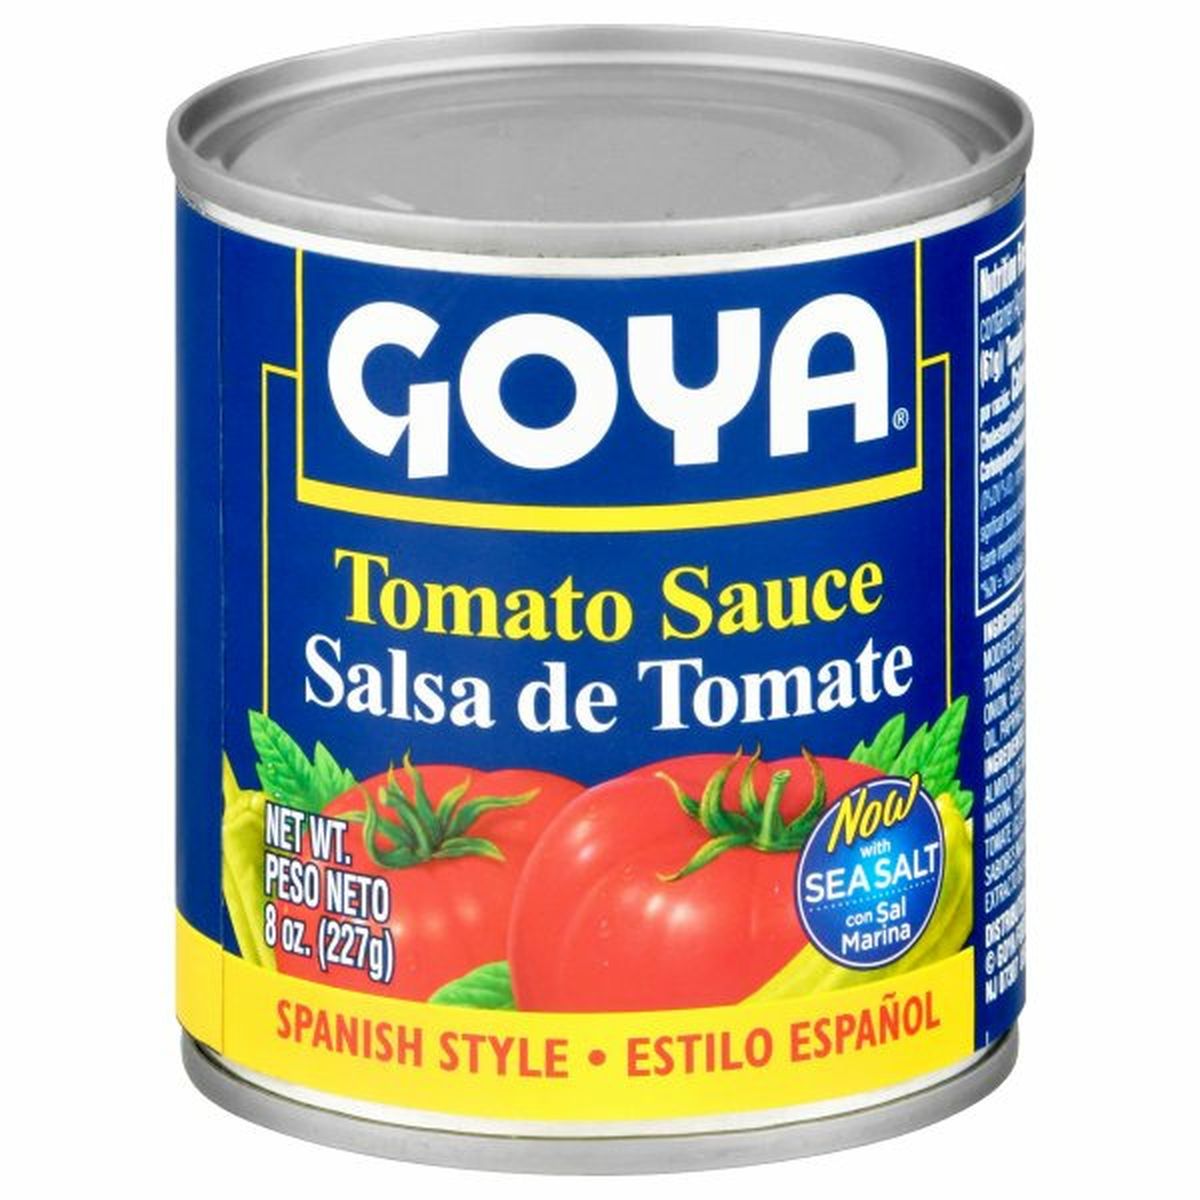 Calories in Goya Tomato Sauce, Spanish Style